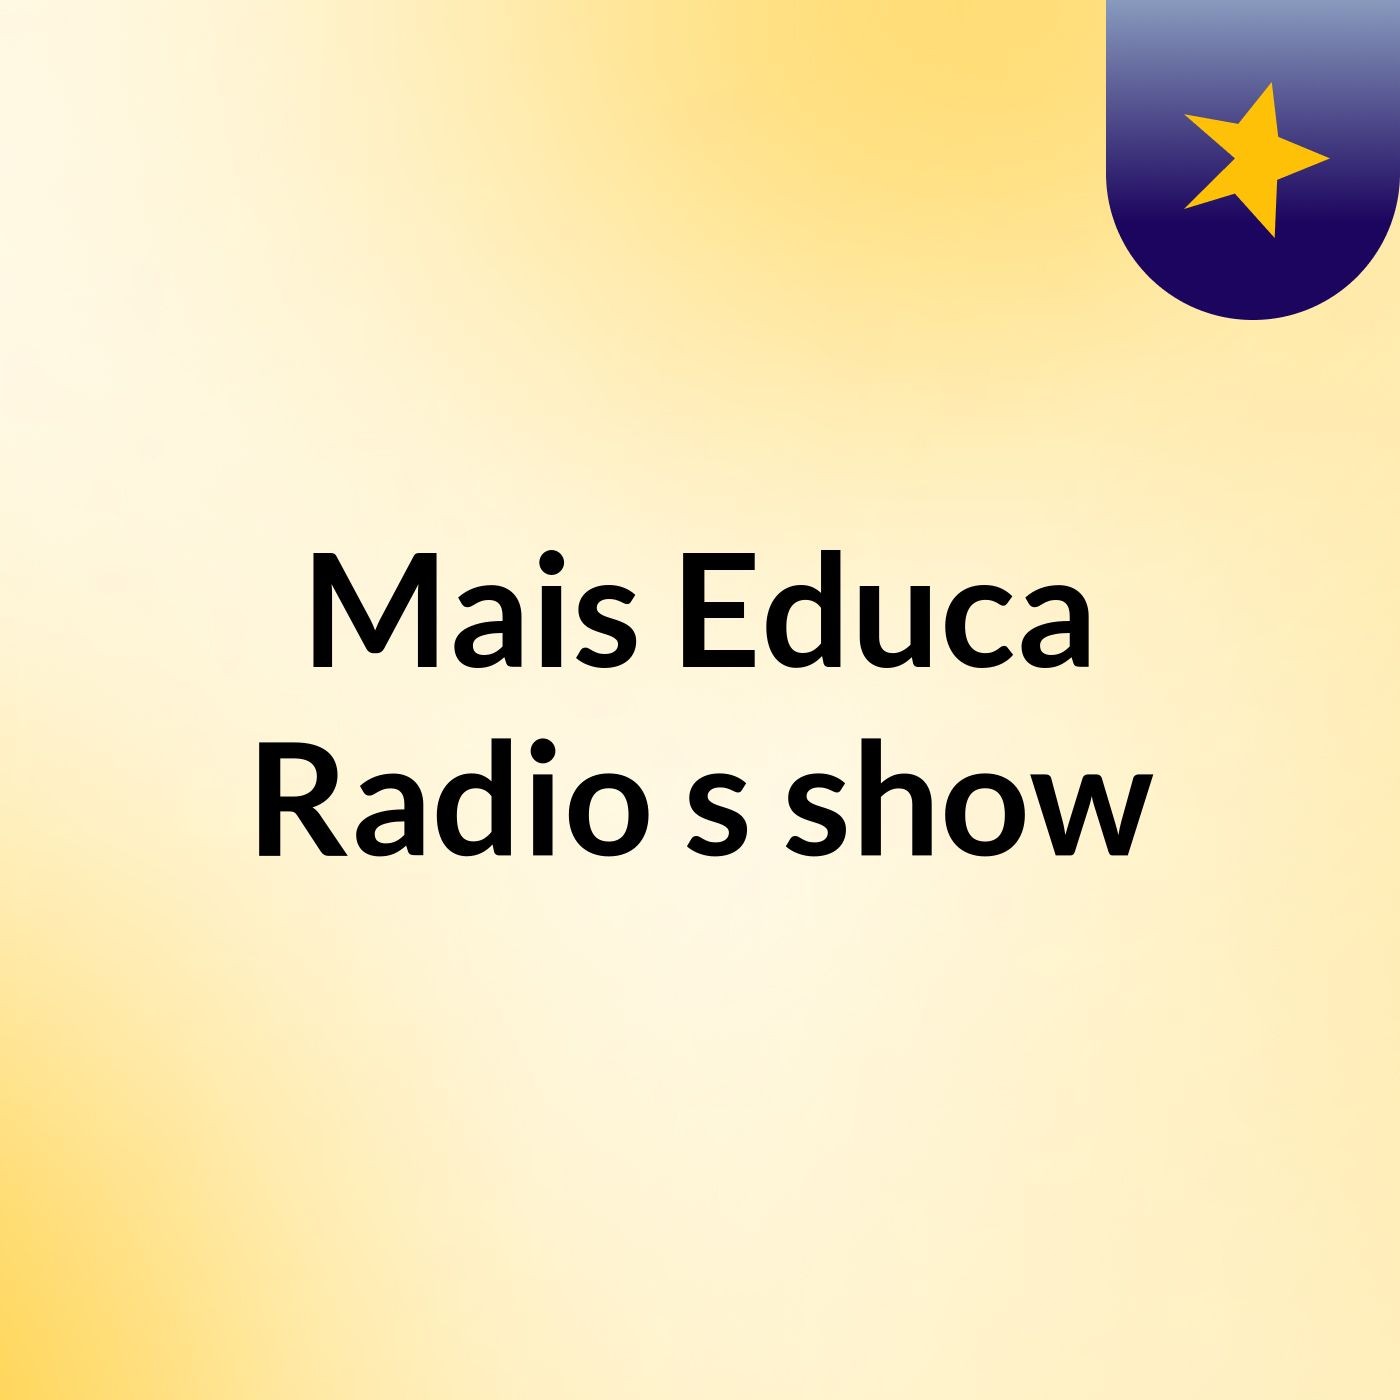 Mais Educa Radio's show